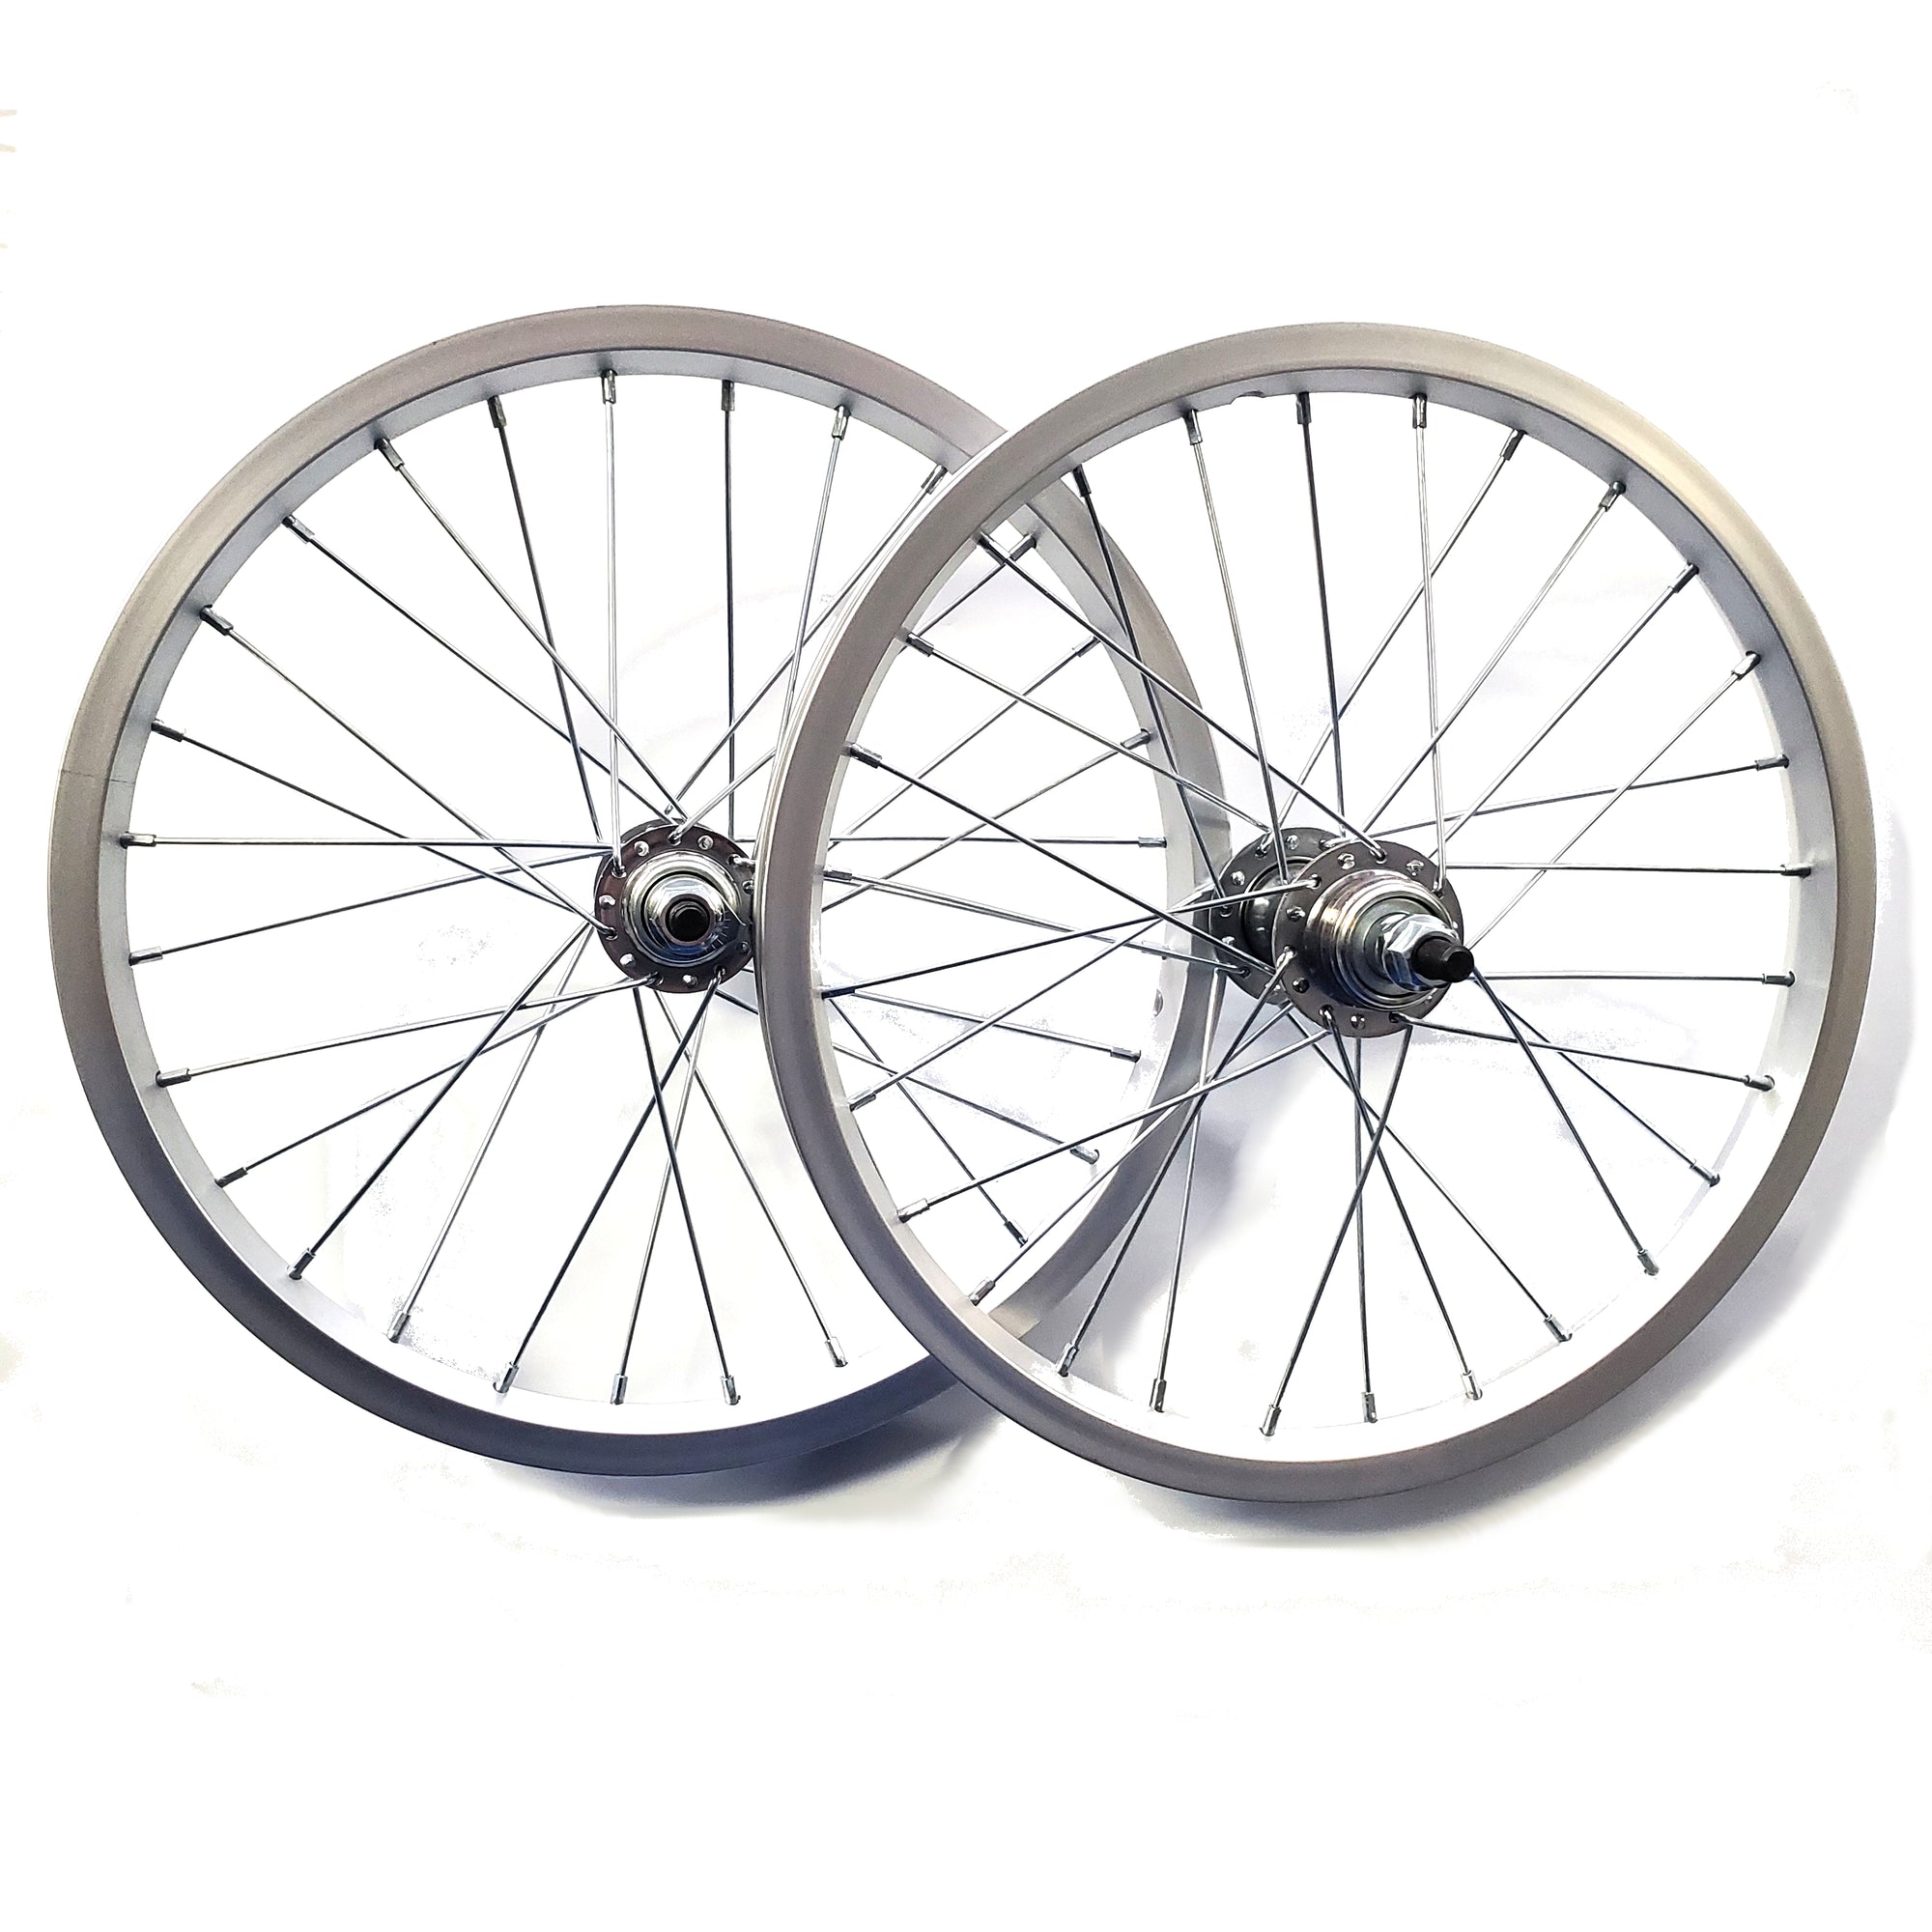 16" Aluminum BMX Wheelset - Freewheel - Pair - Silver